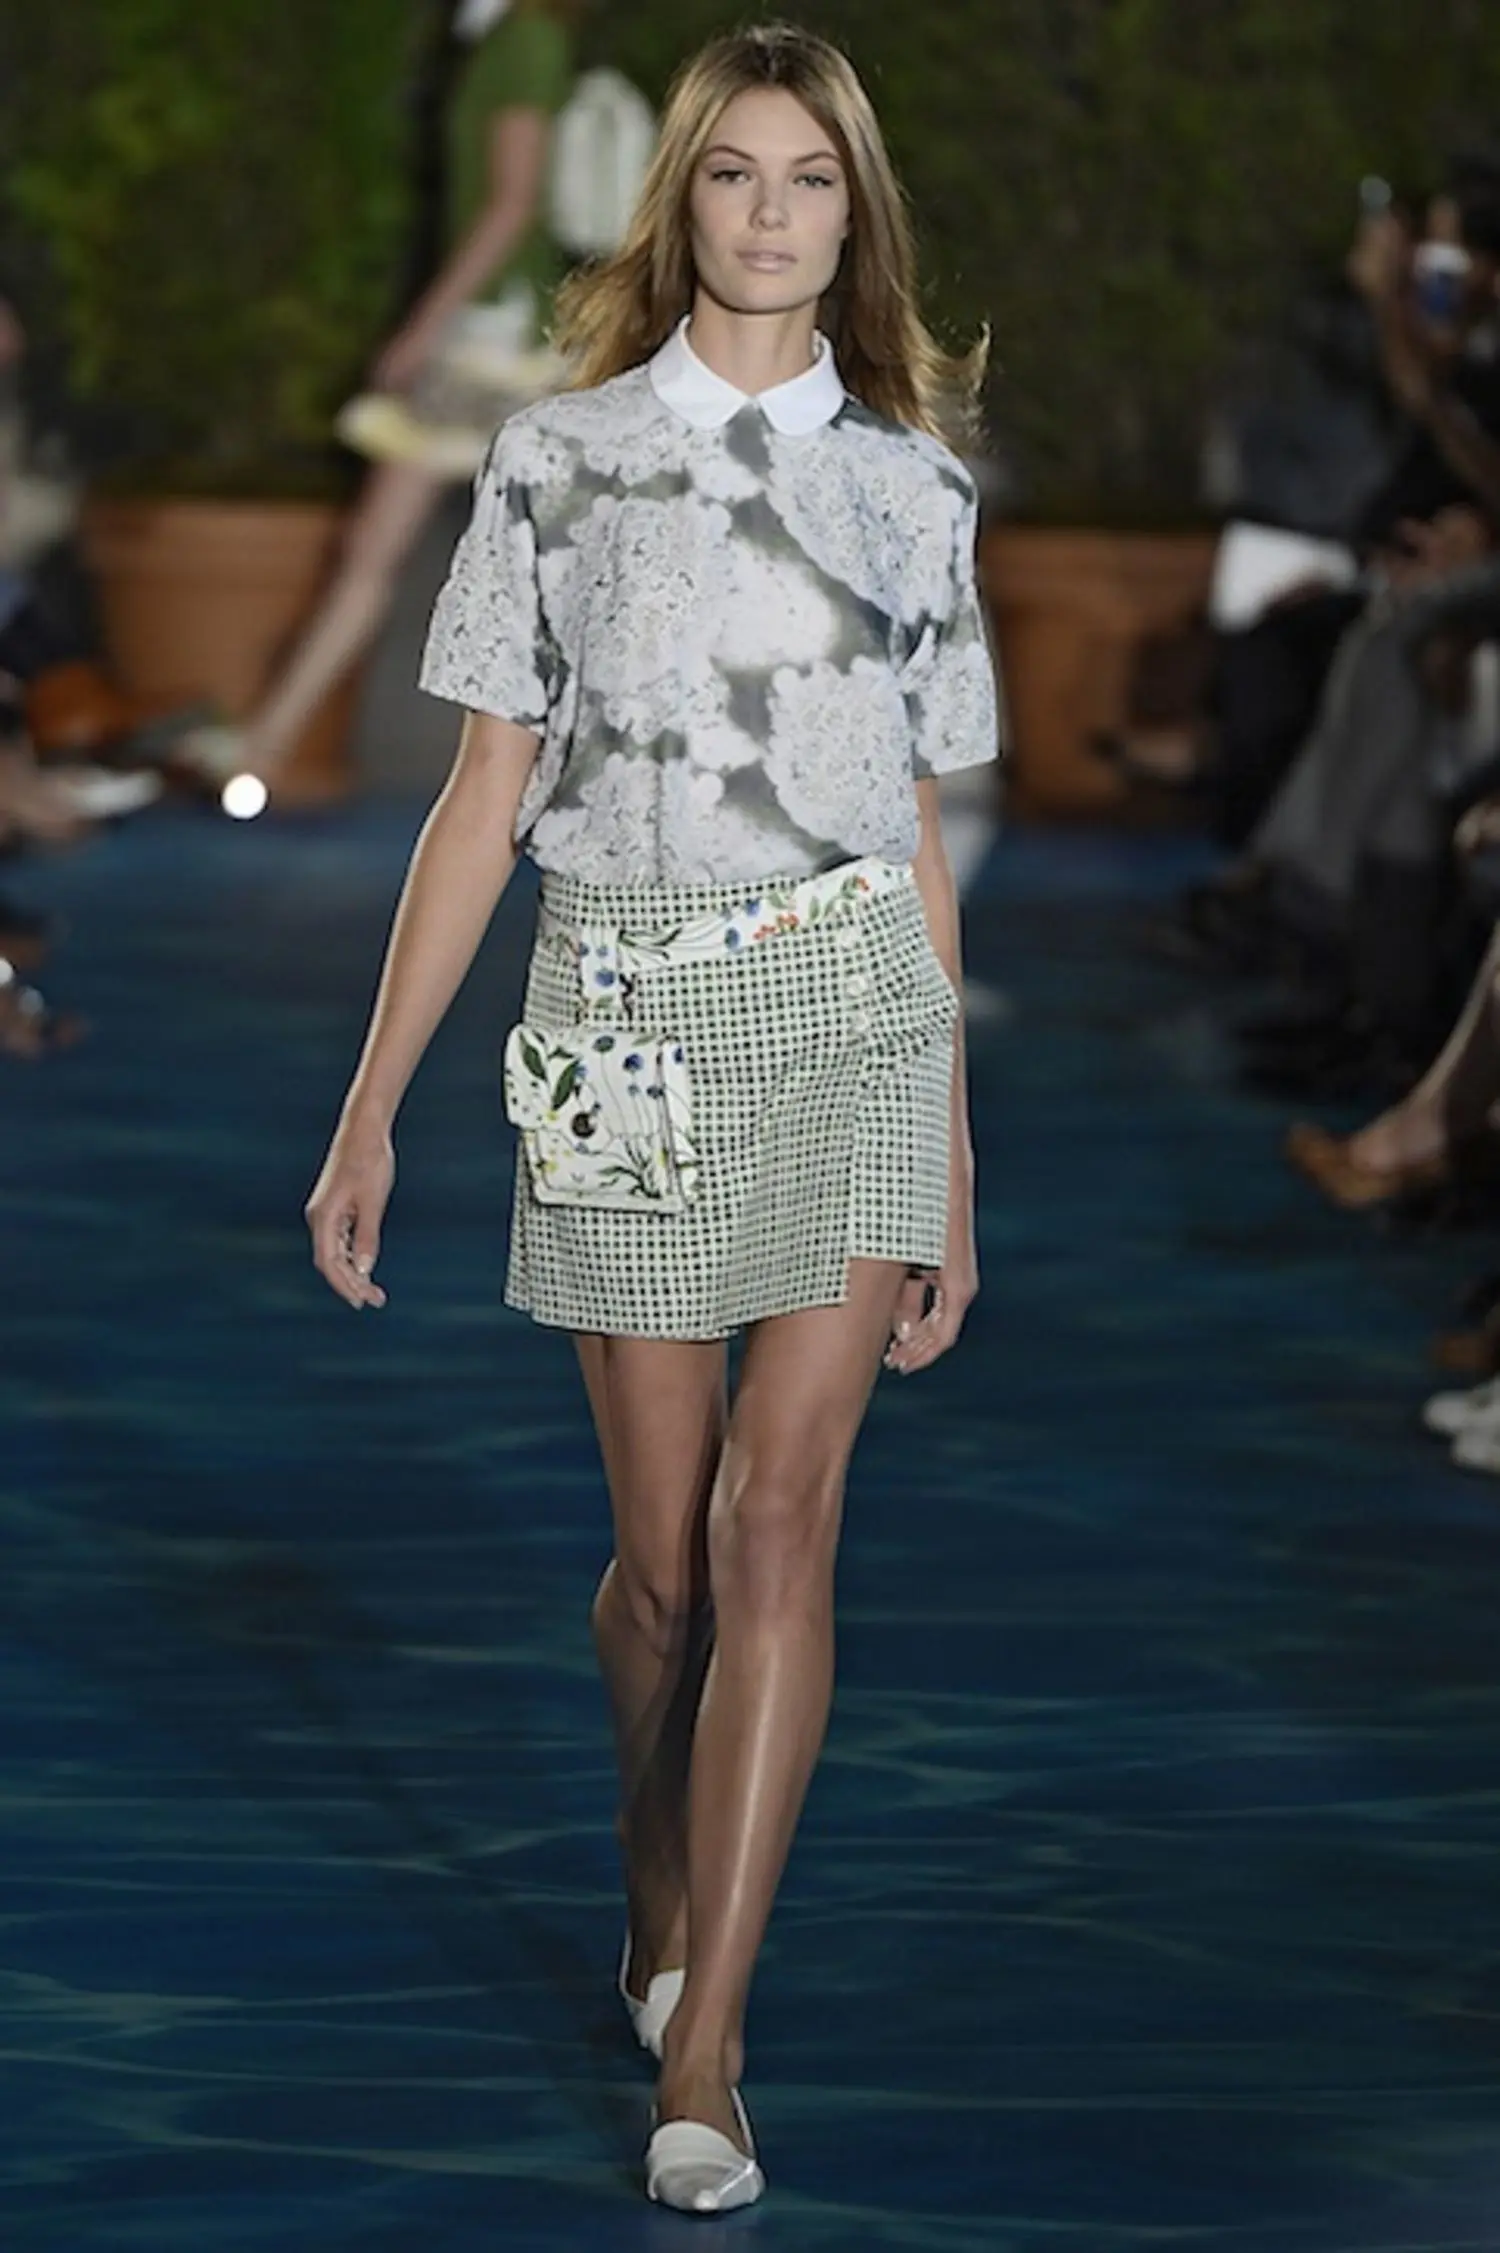 Mix and match tas pinggang seperti tampilan model diatas catwalk. (Image: media.glamour.com)